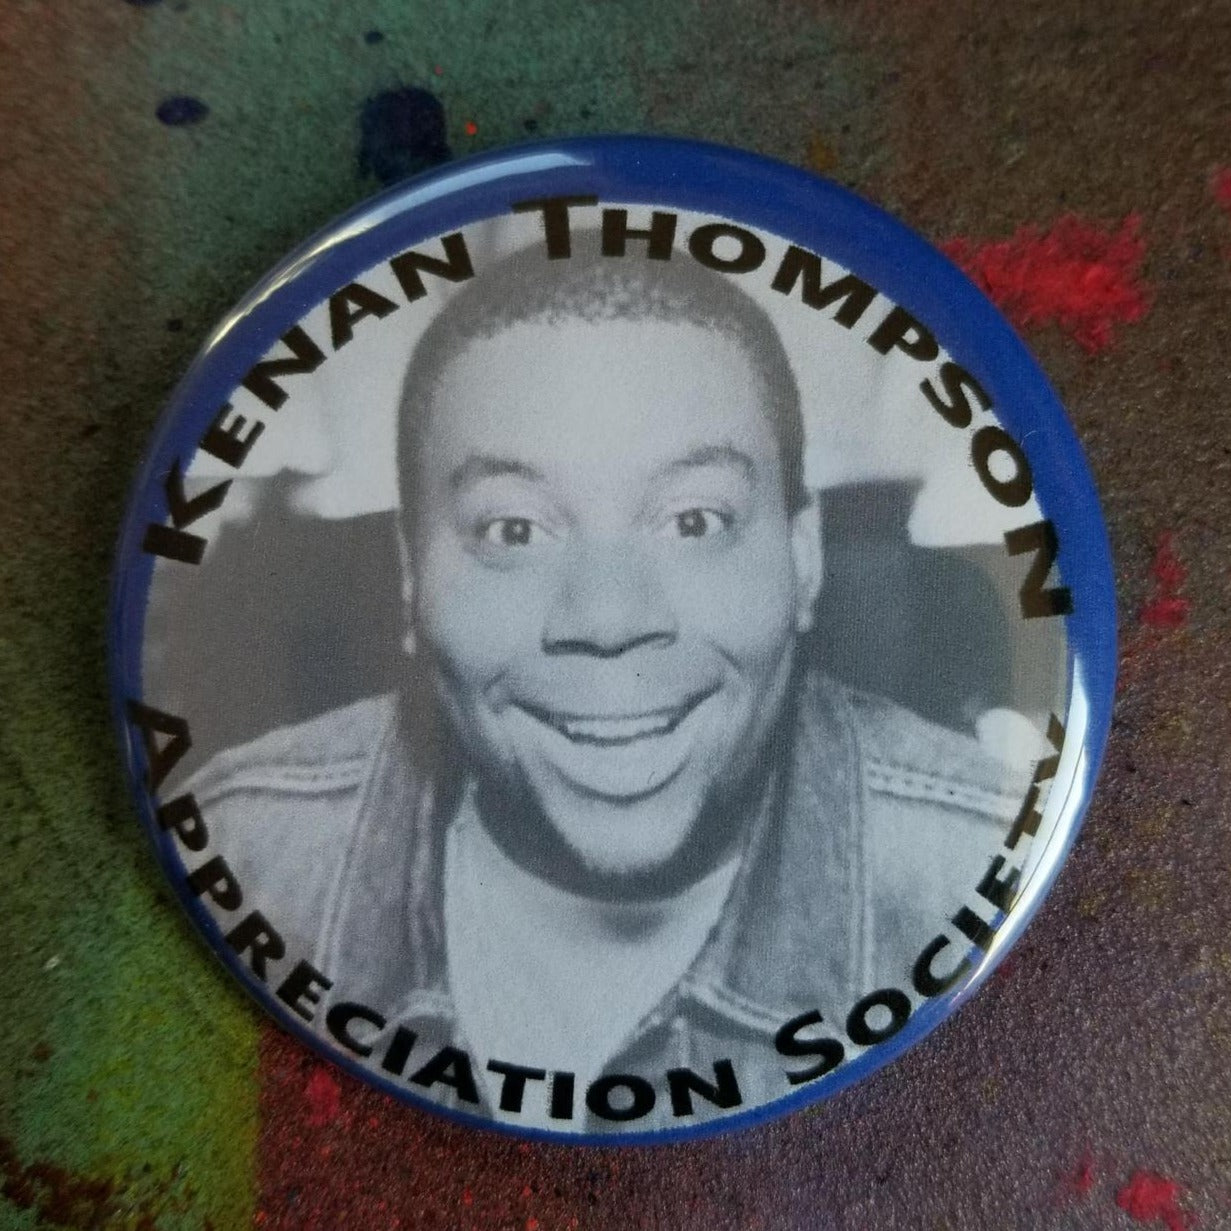 Kenan Thompson Appreciation Society PIN